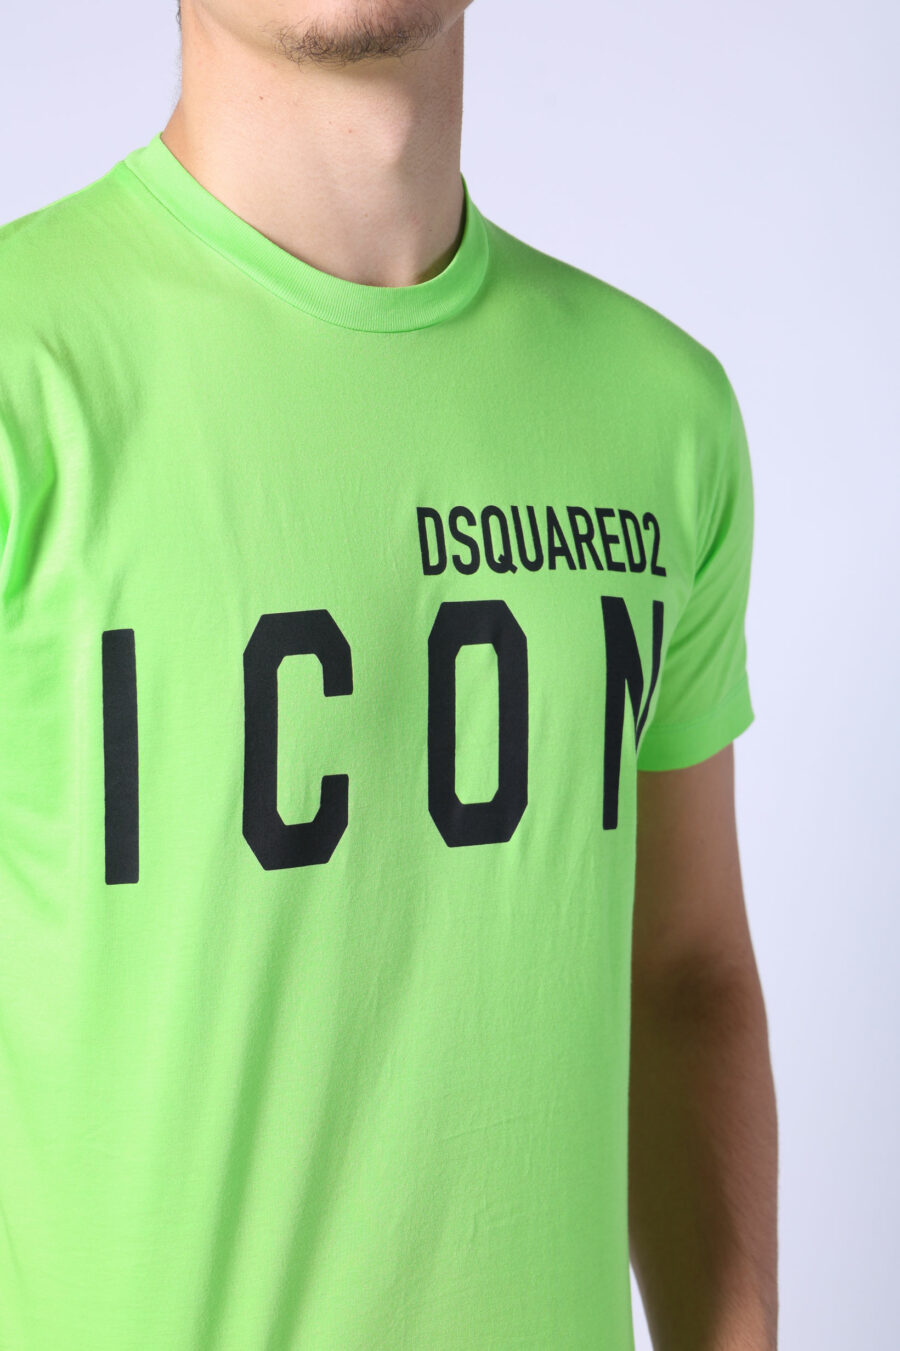 Lime grünes T-Shirt mit schwarzem "Icon" Maxilogo - Untitled Catalog 05396